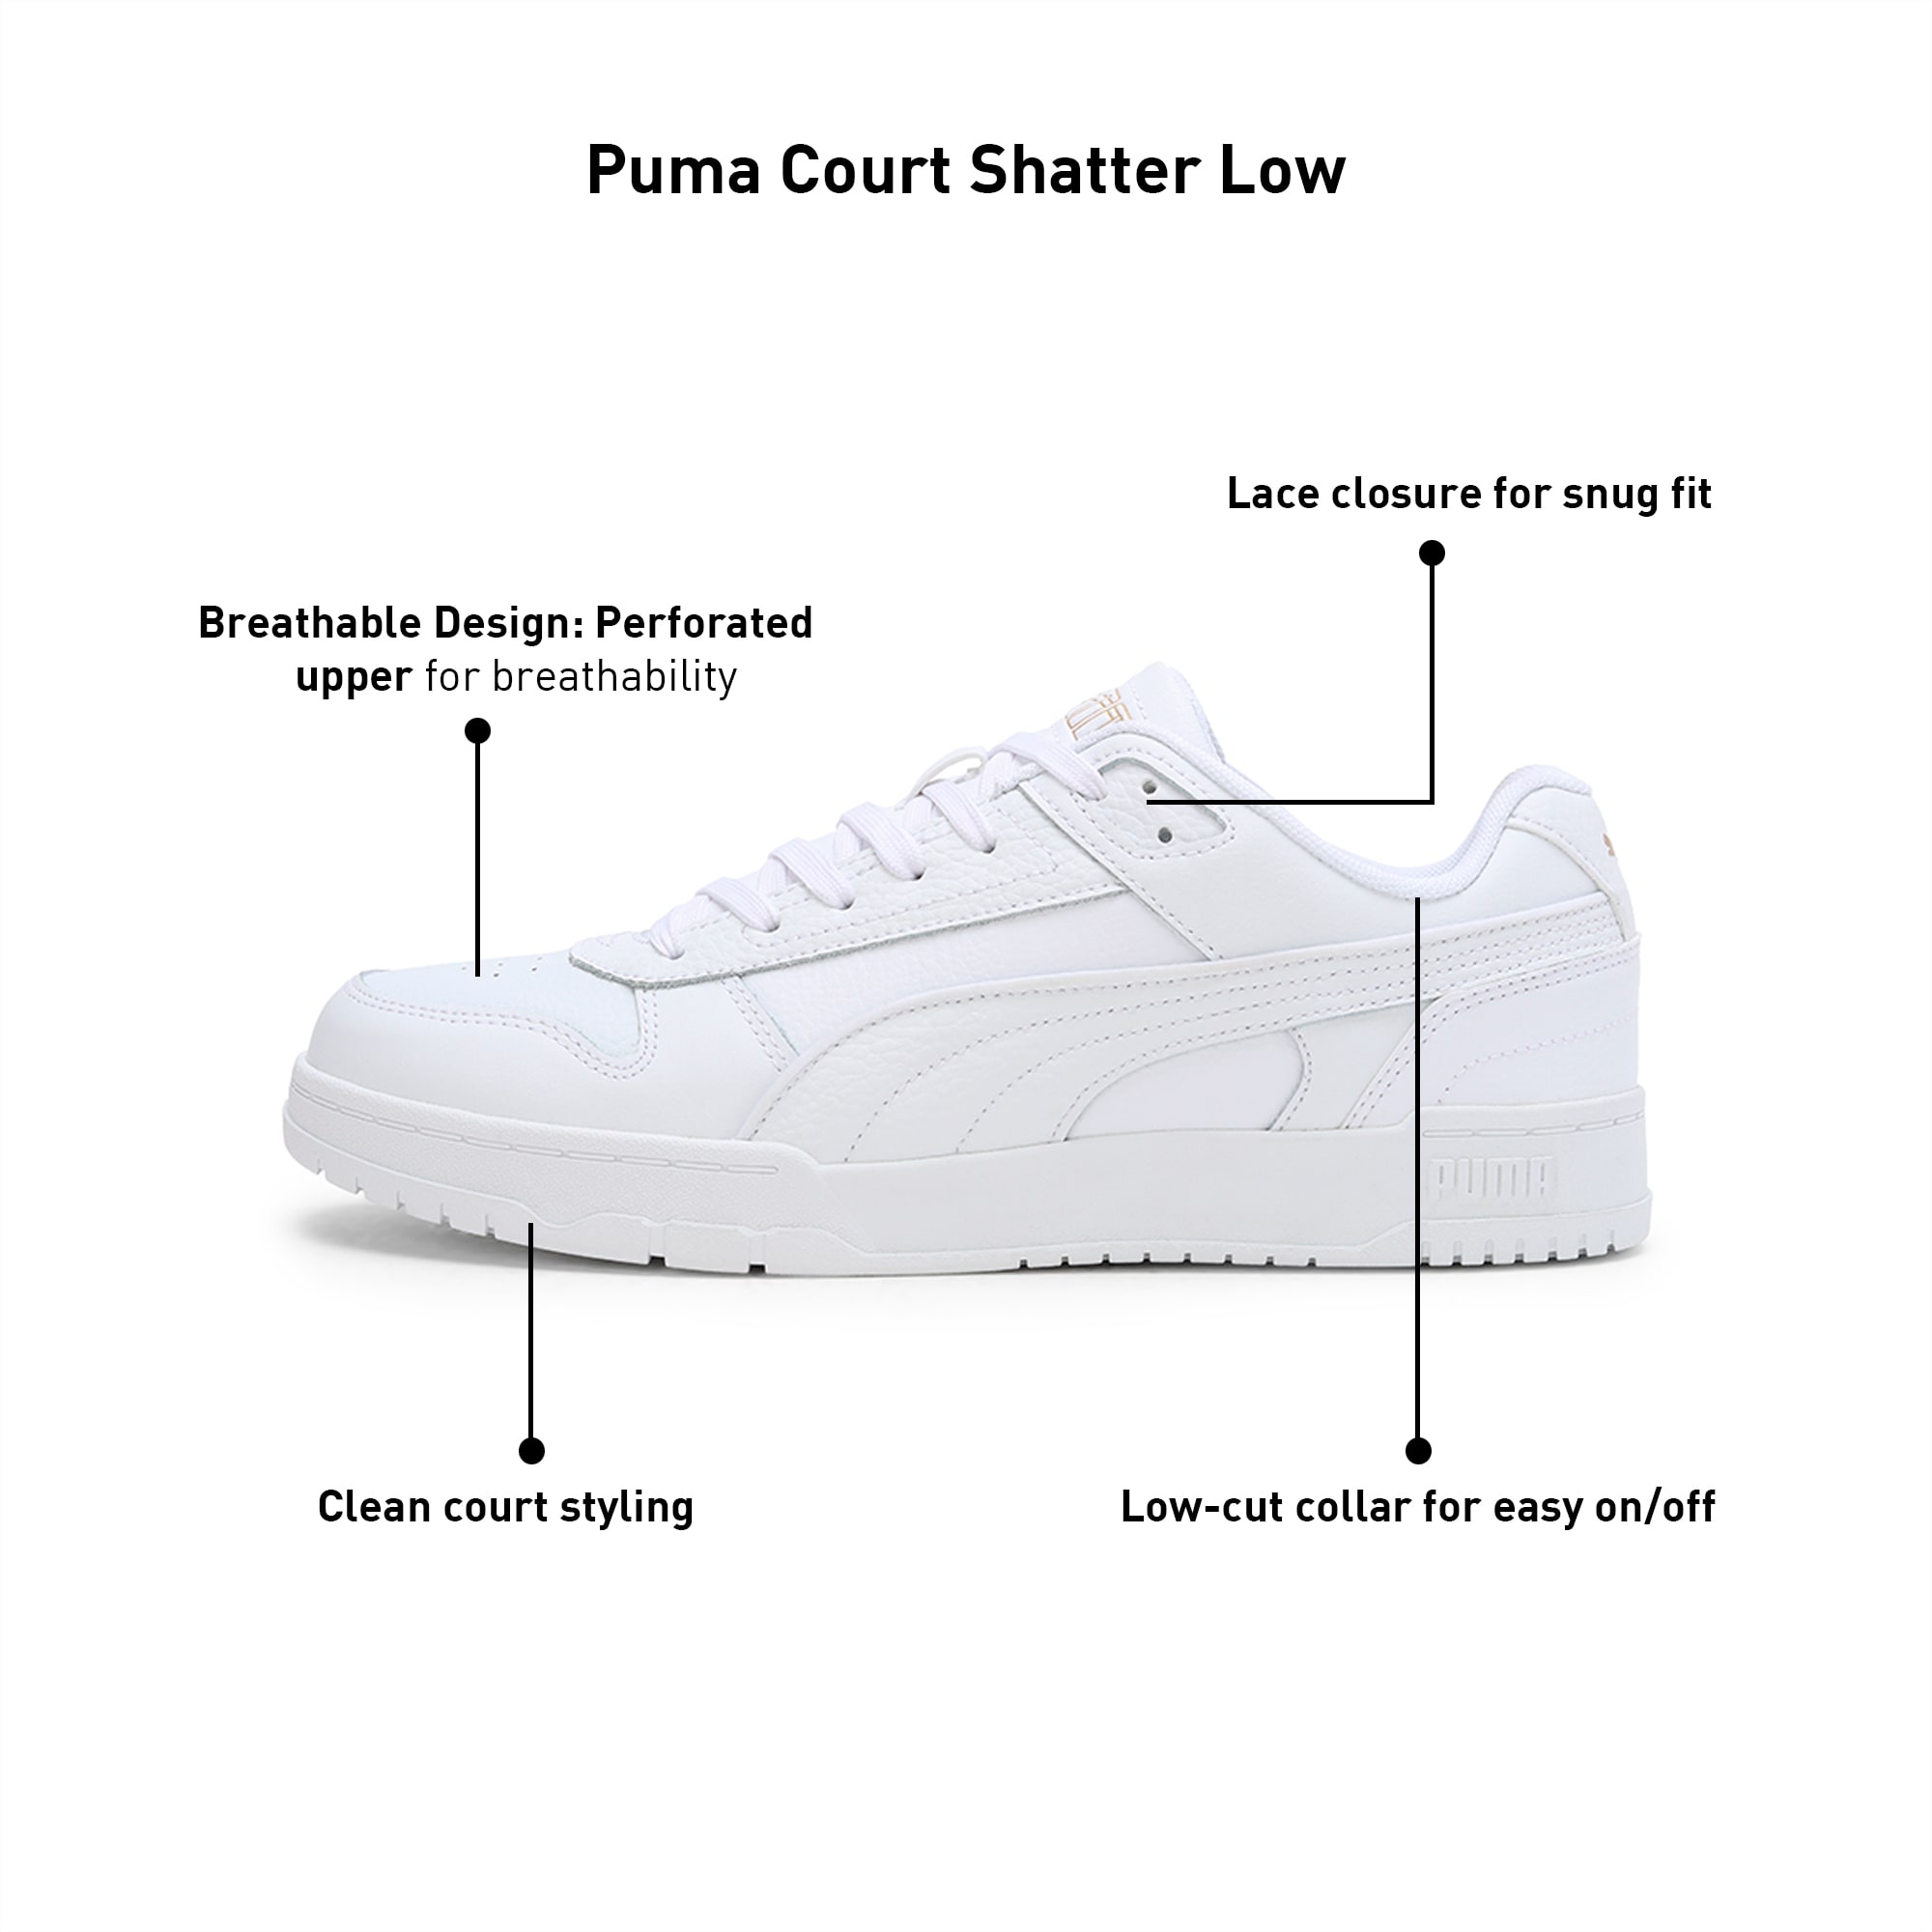 PUMA Court Shatter Low Men's Sneakers